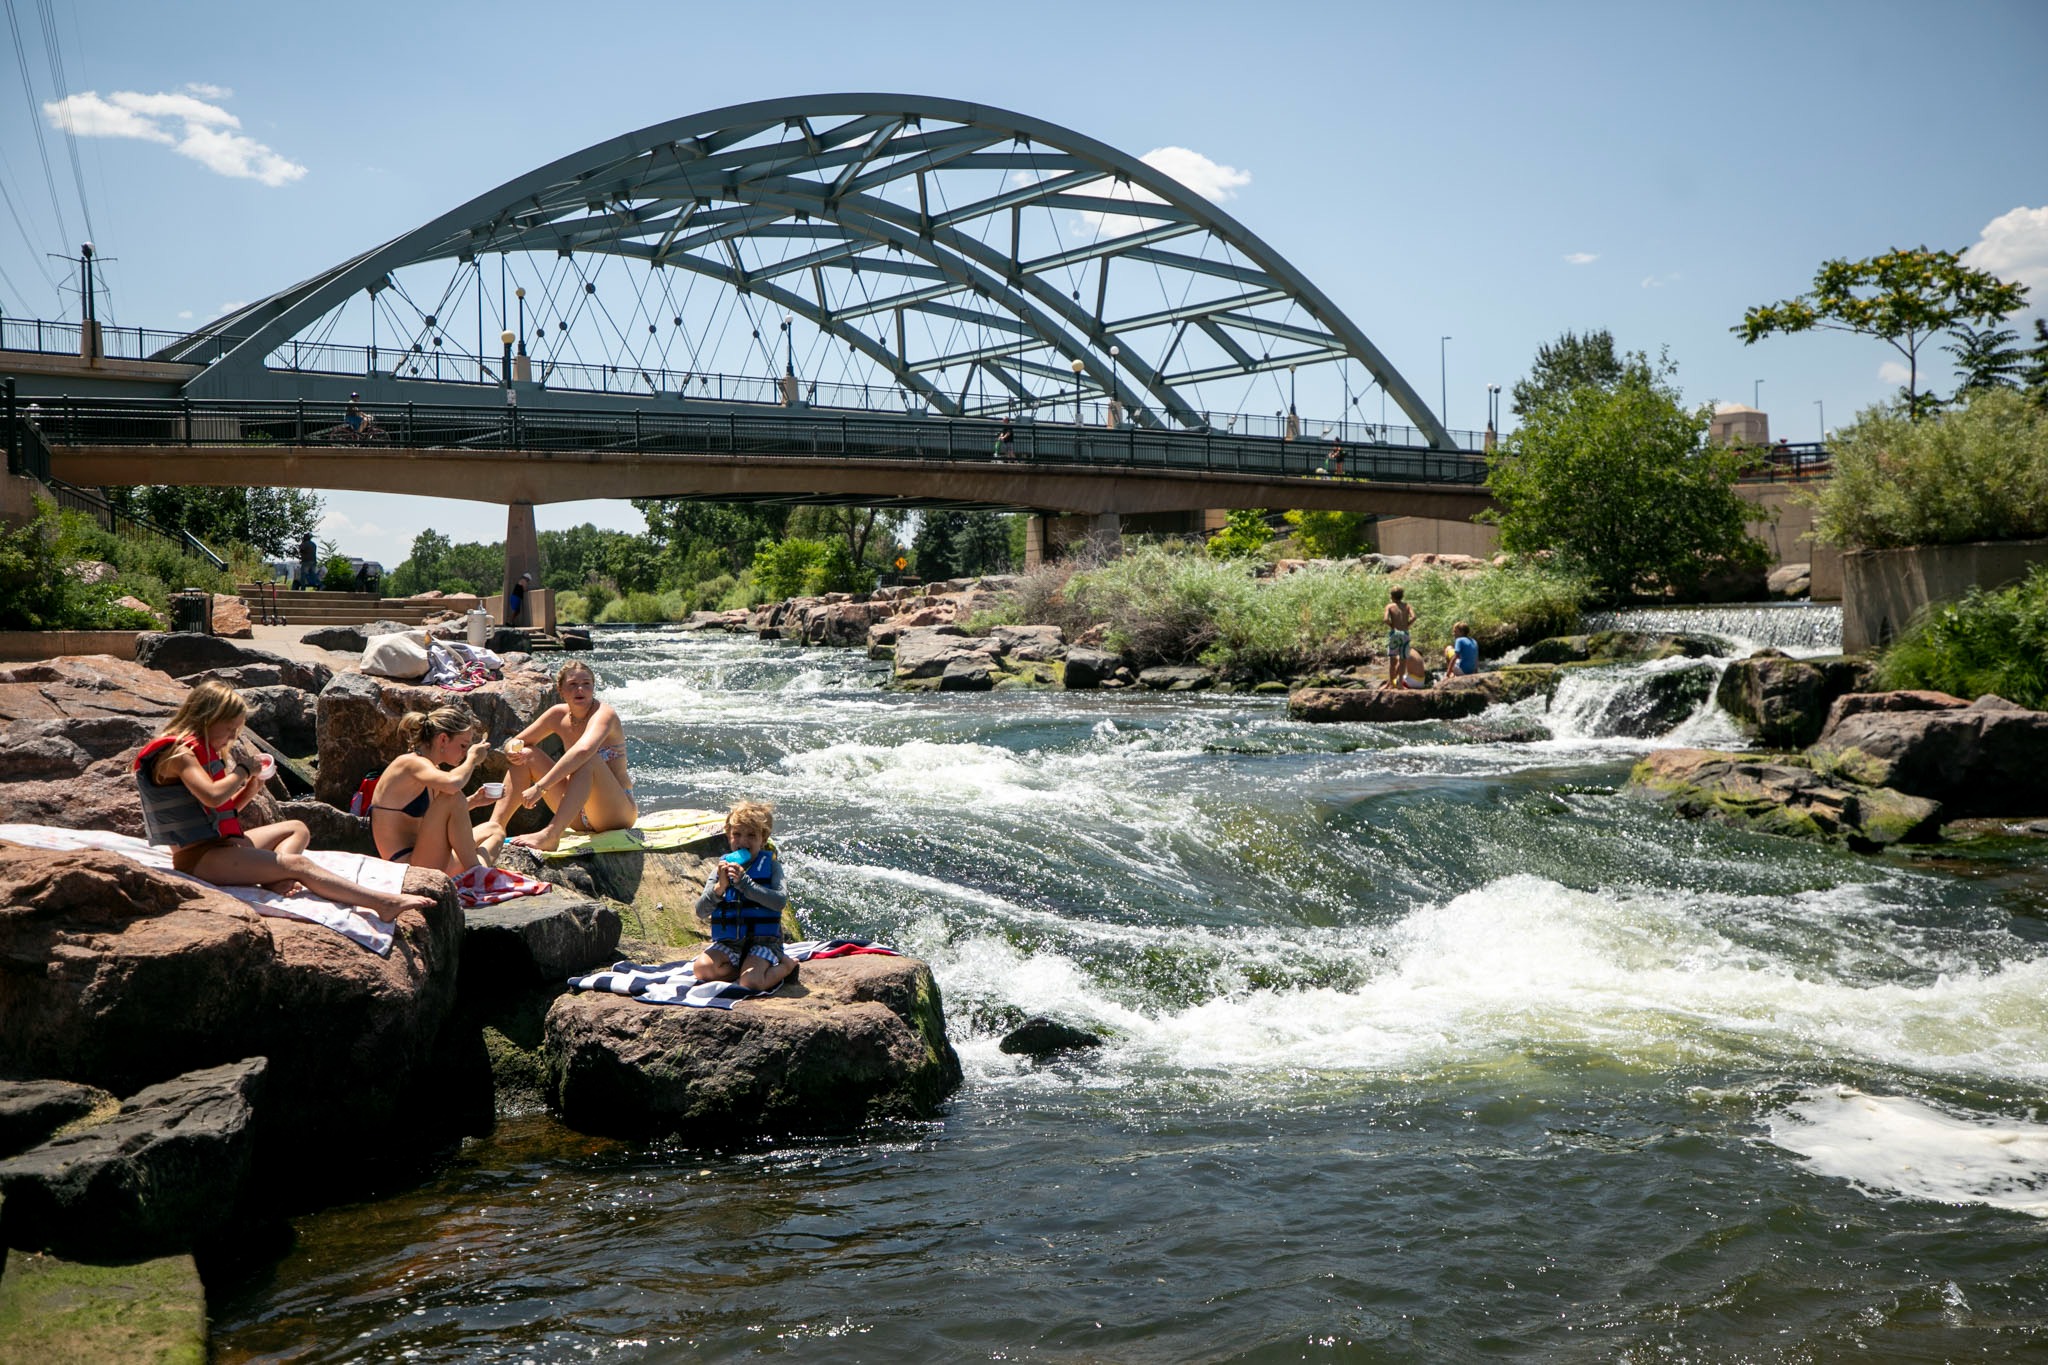 People in swimsuits sit on rocks next to a flowing rapid. A big metal bridge looms behind them.